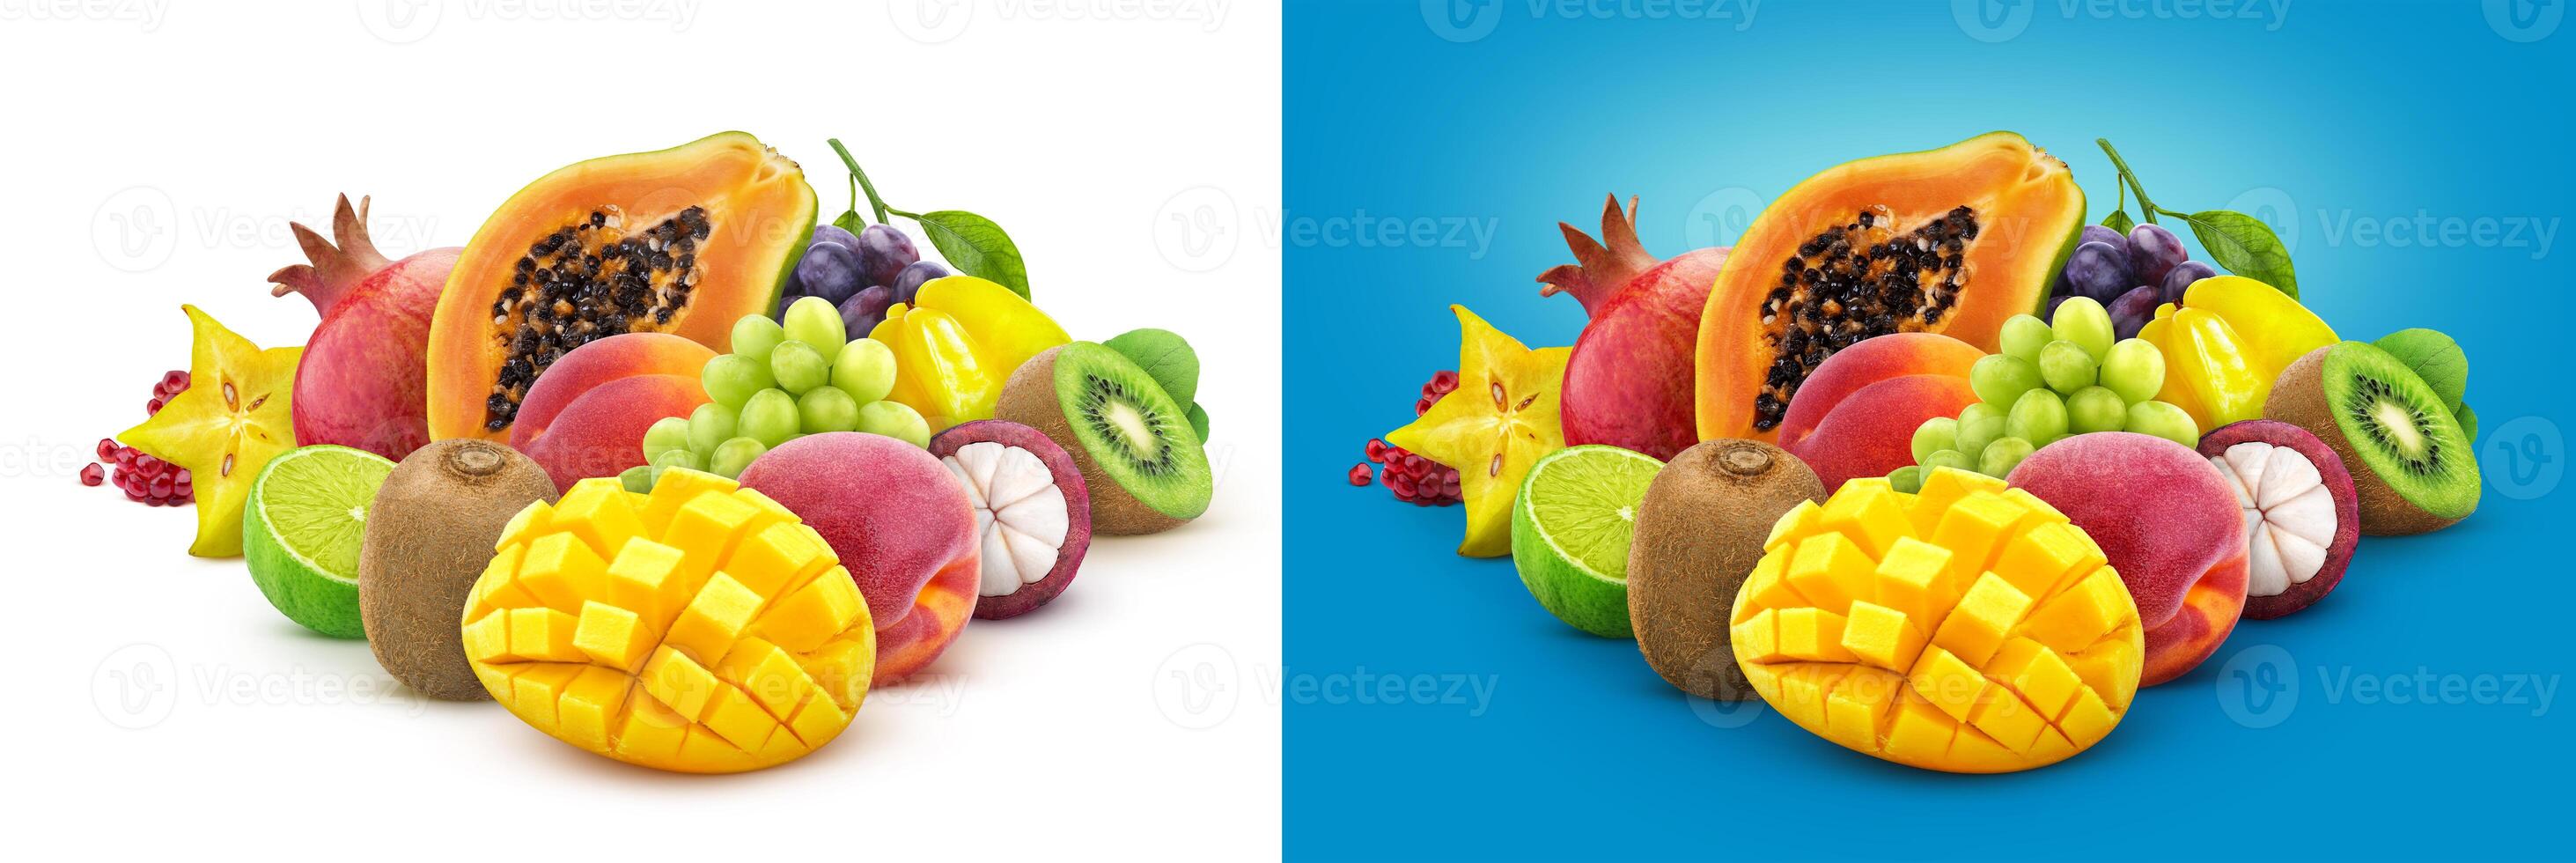 Heap of fresh exotic fruits photo